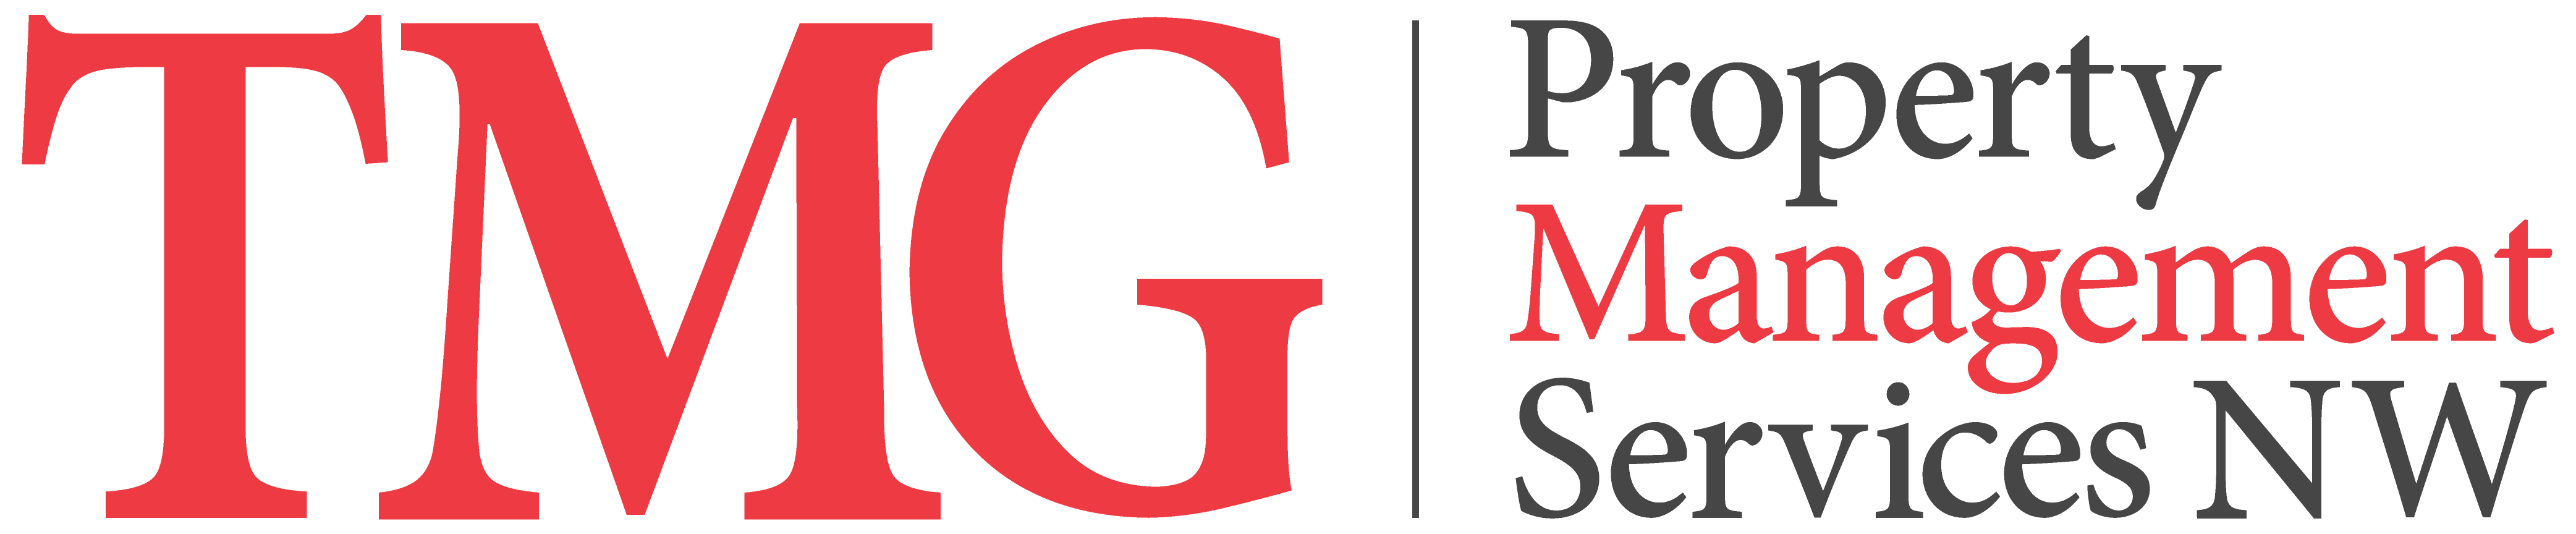 TMG logo_No tag